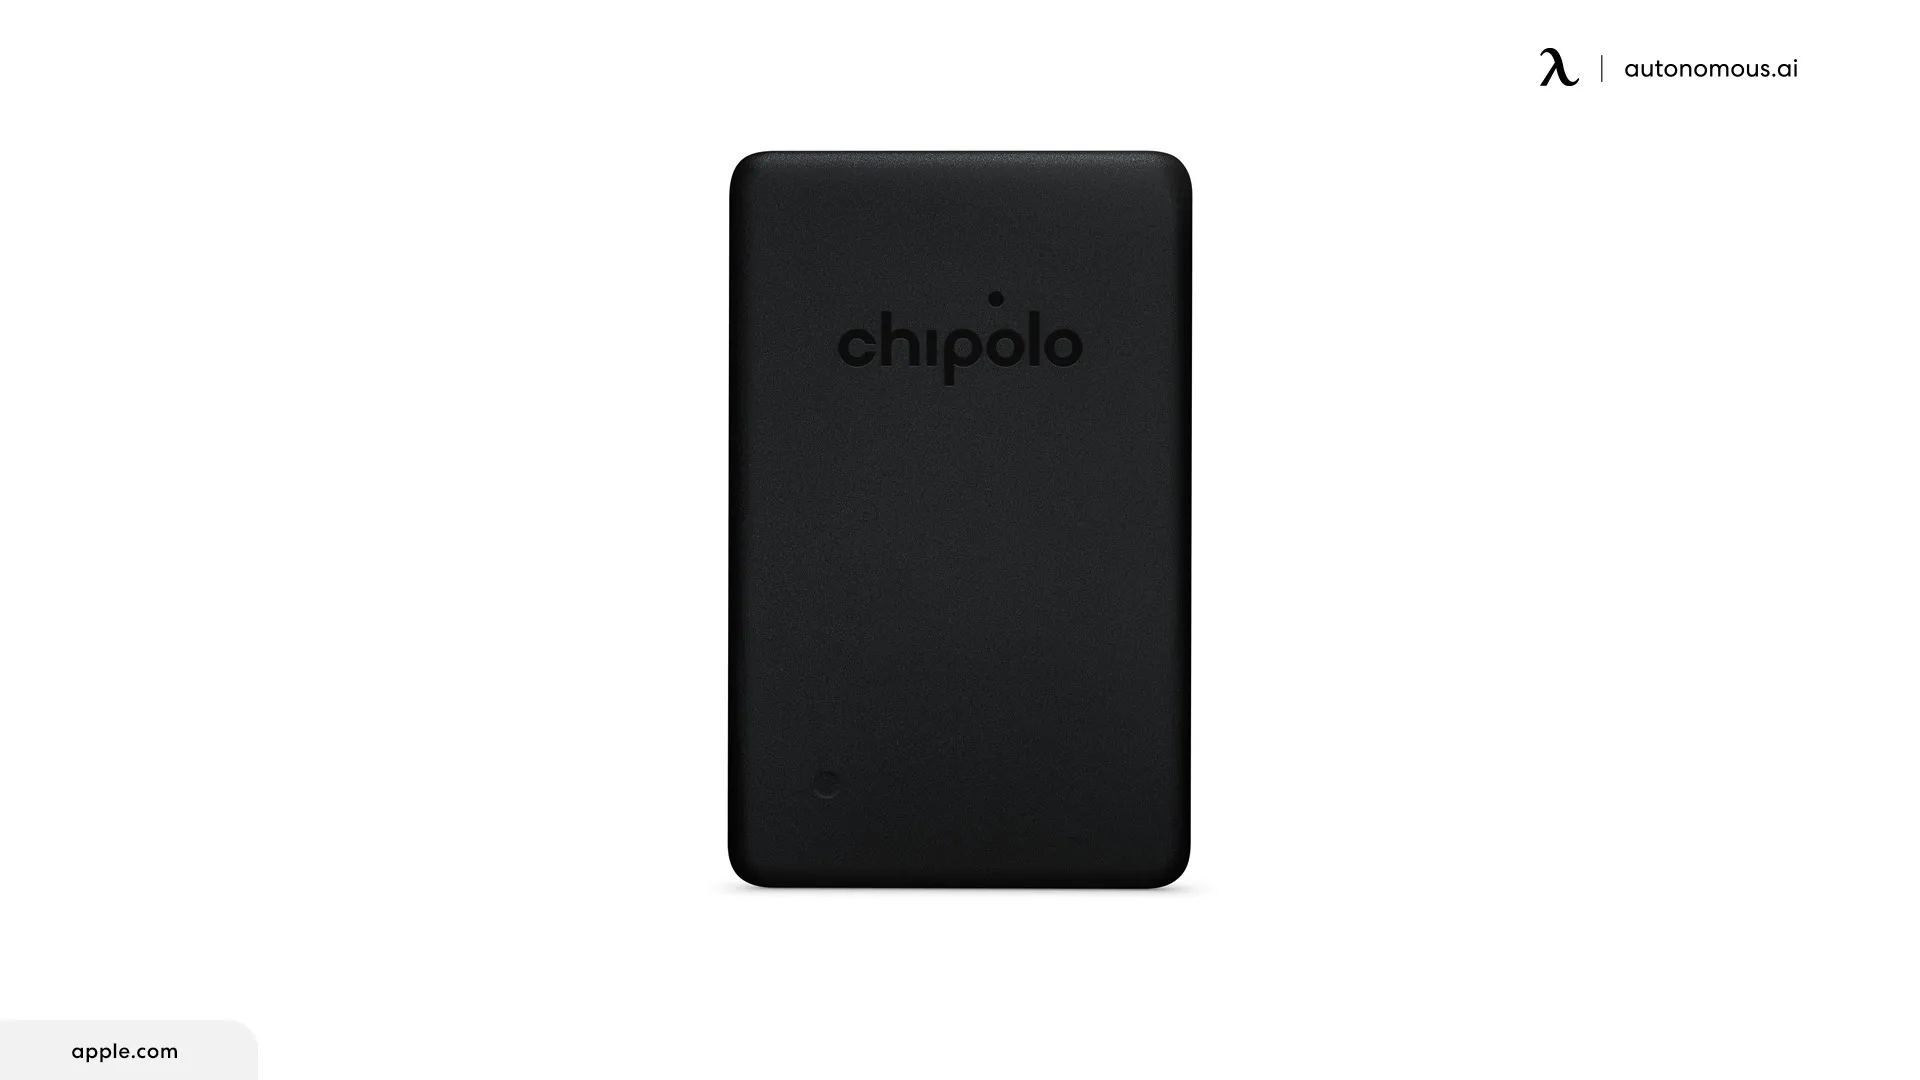 Chipolo CARD Spot Wallet Finder